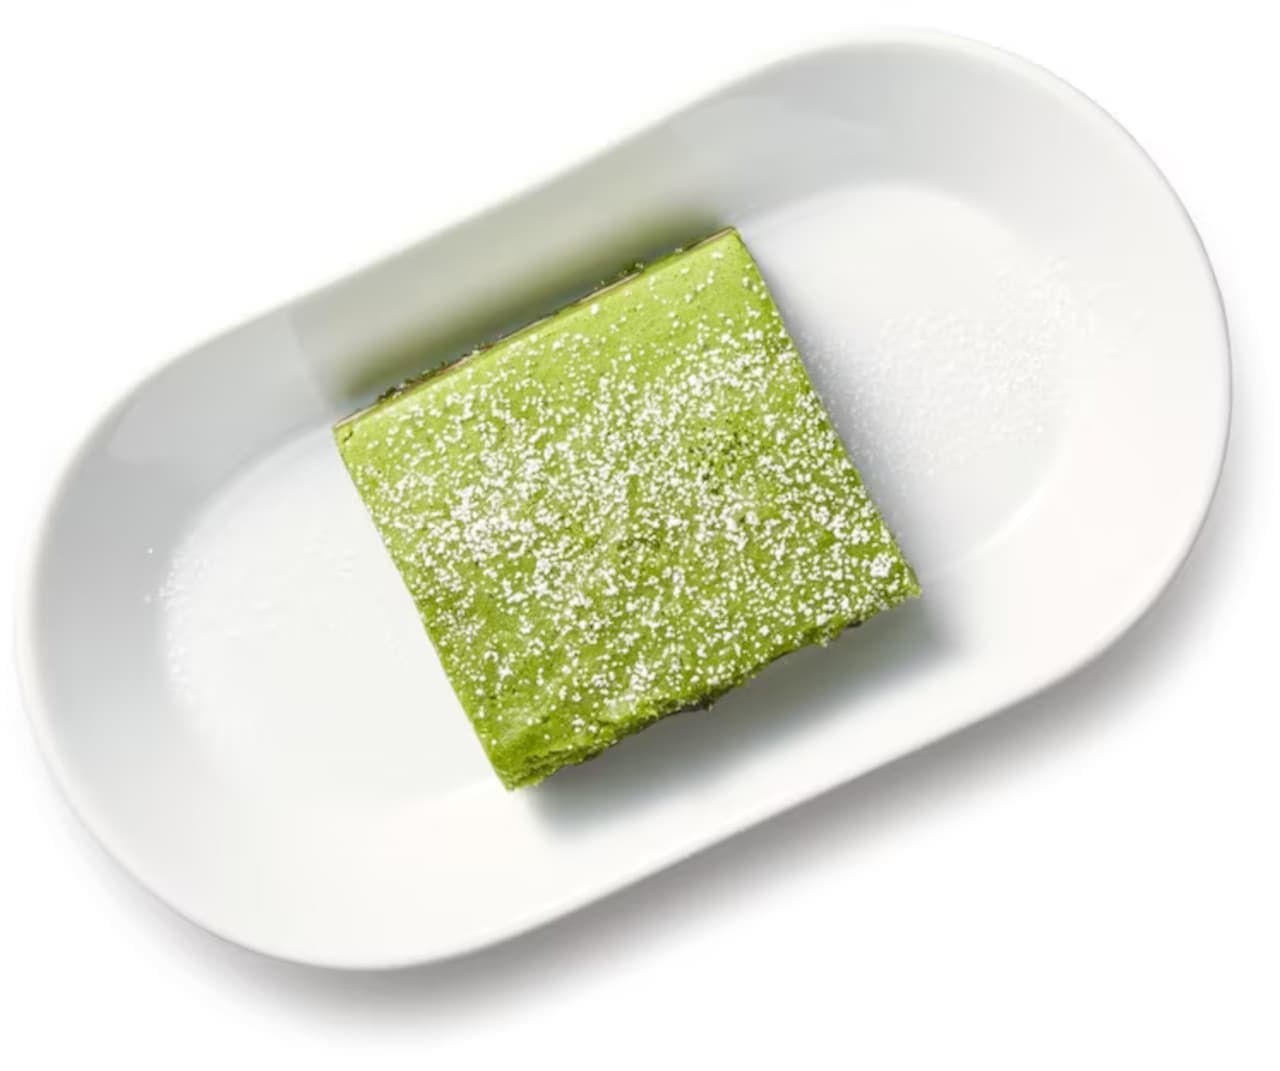 IKEA "Matcha green tea gateau chocolat